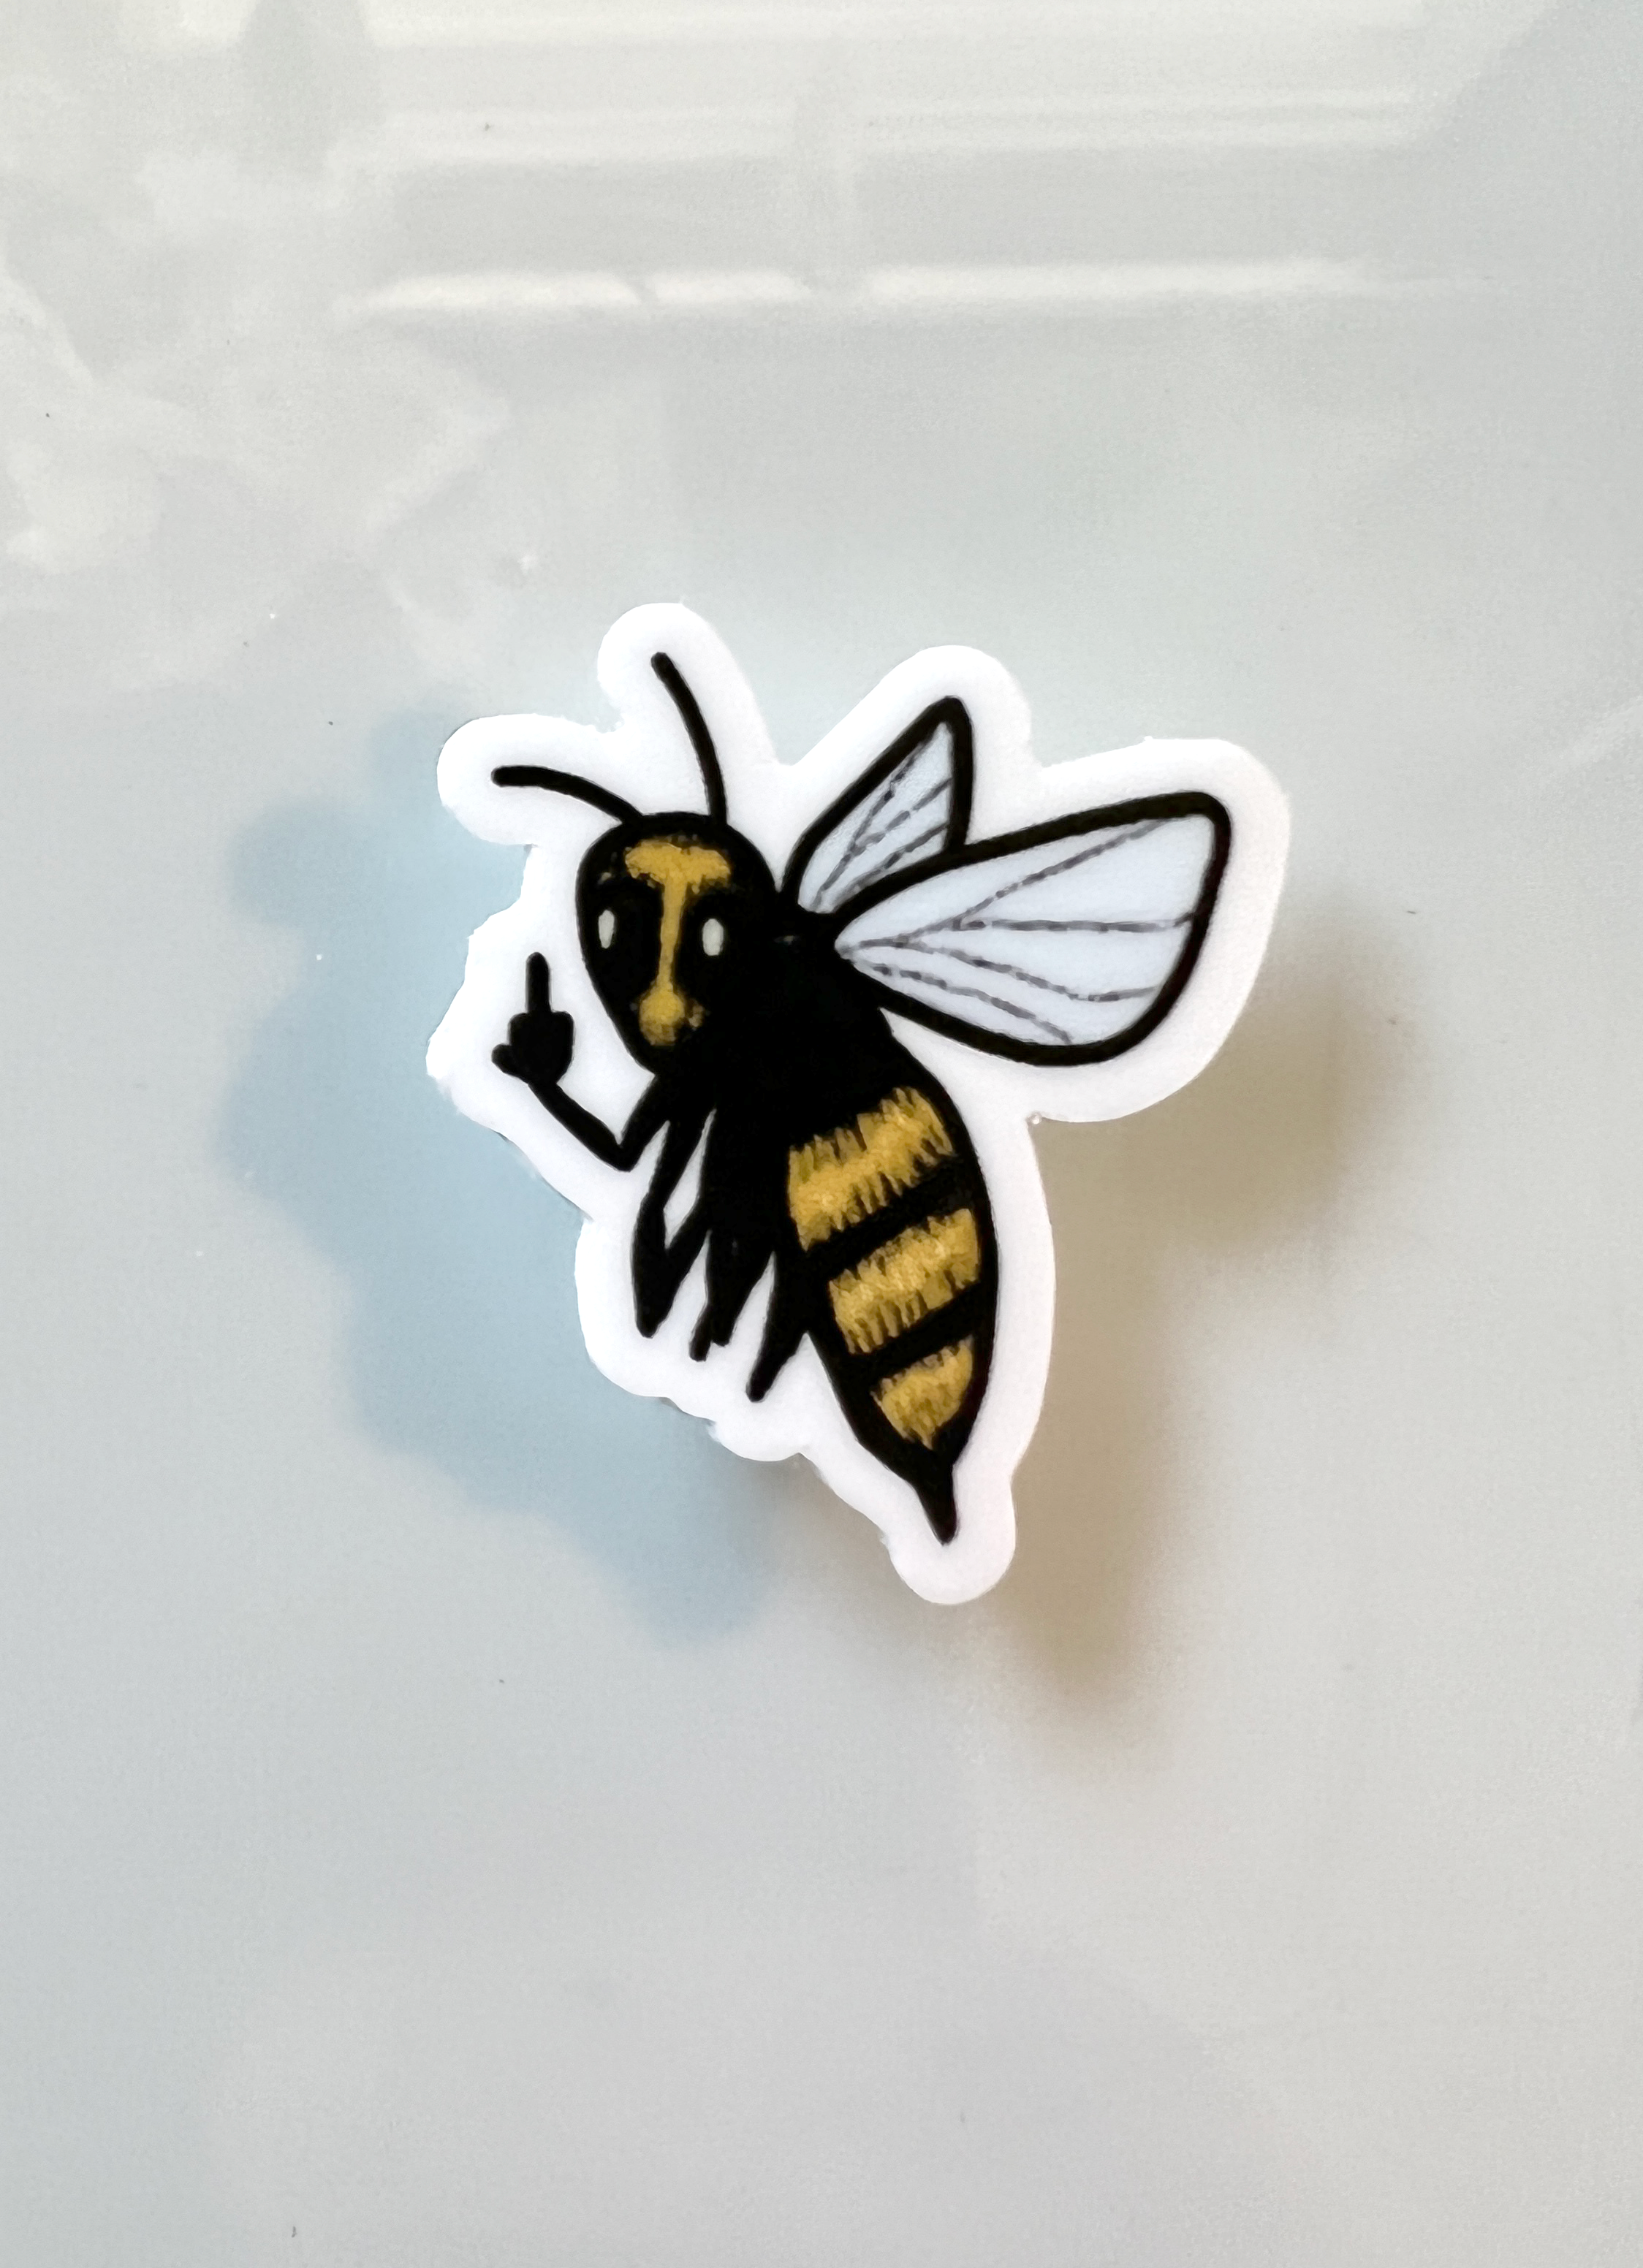 Bee Man Sticker for Sale by Teddy-Kiwi